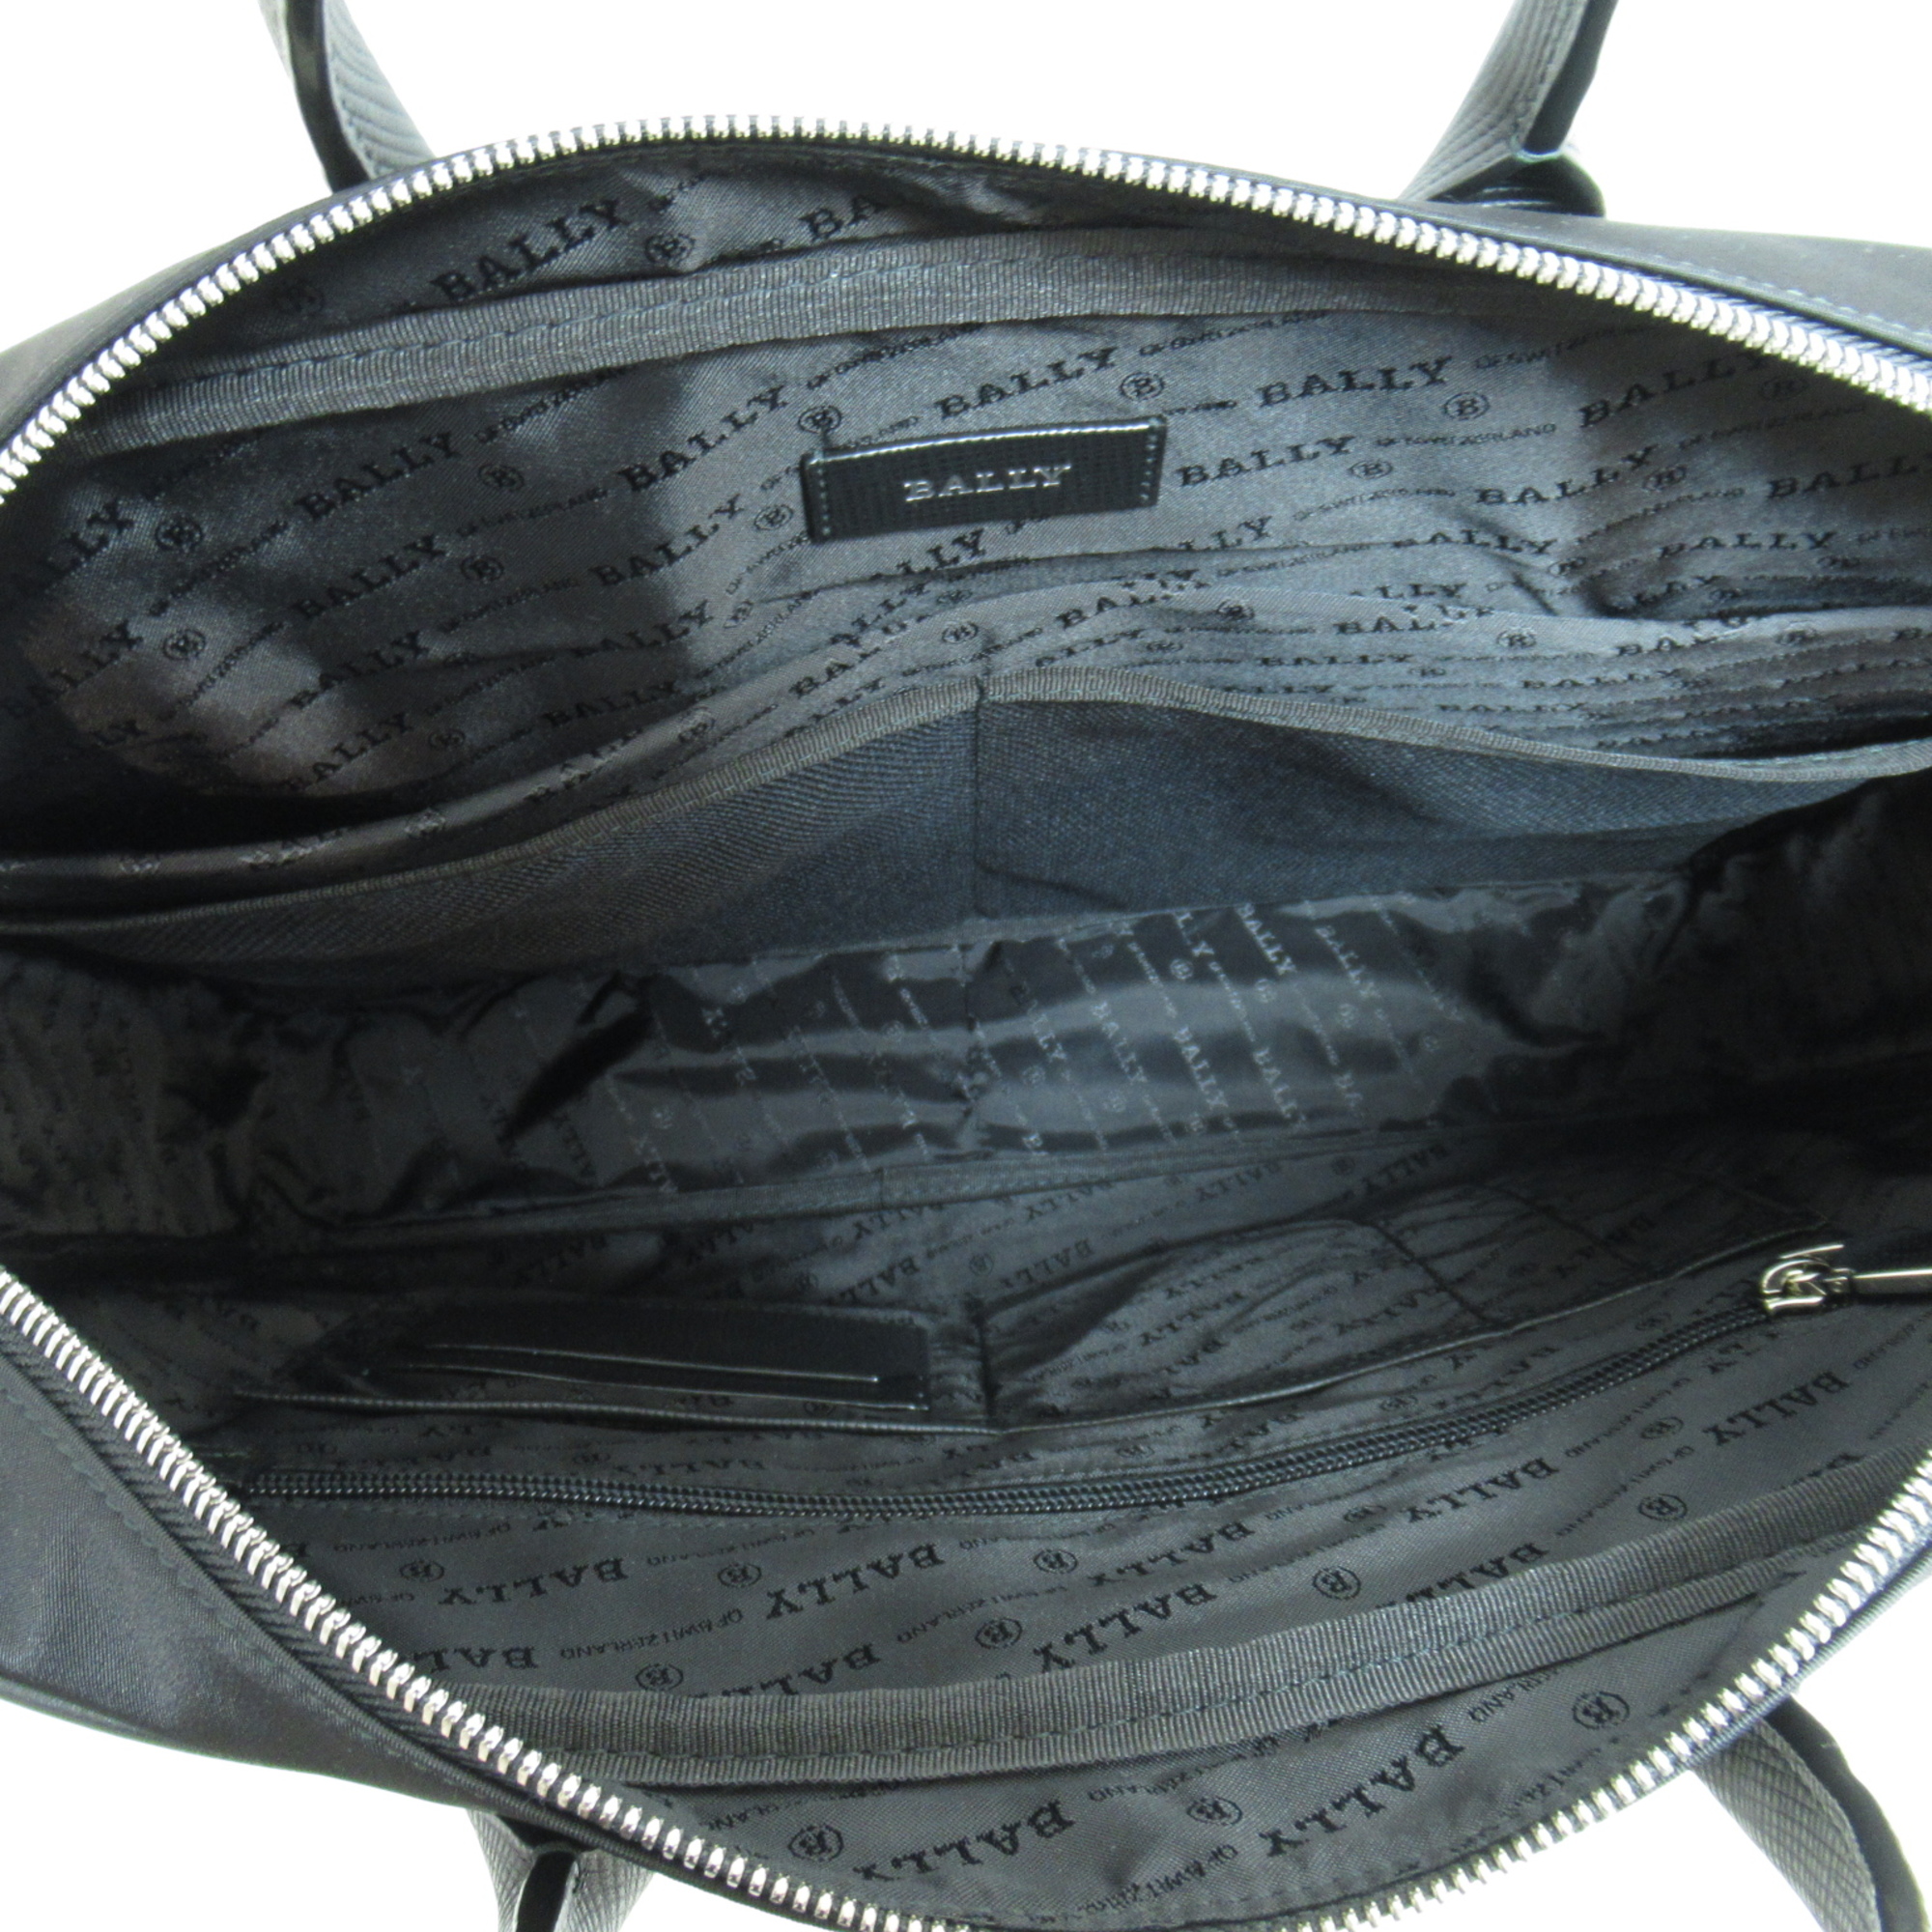 BALLY Business bag Black Nylon 6236759